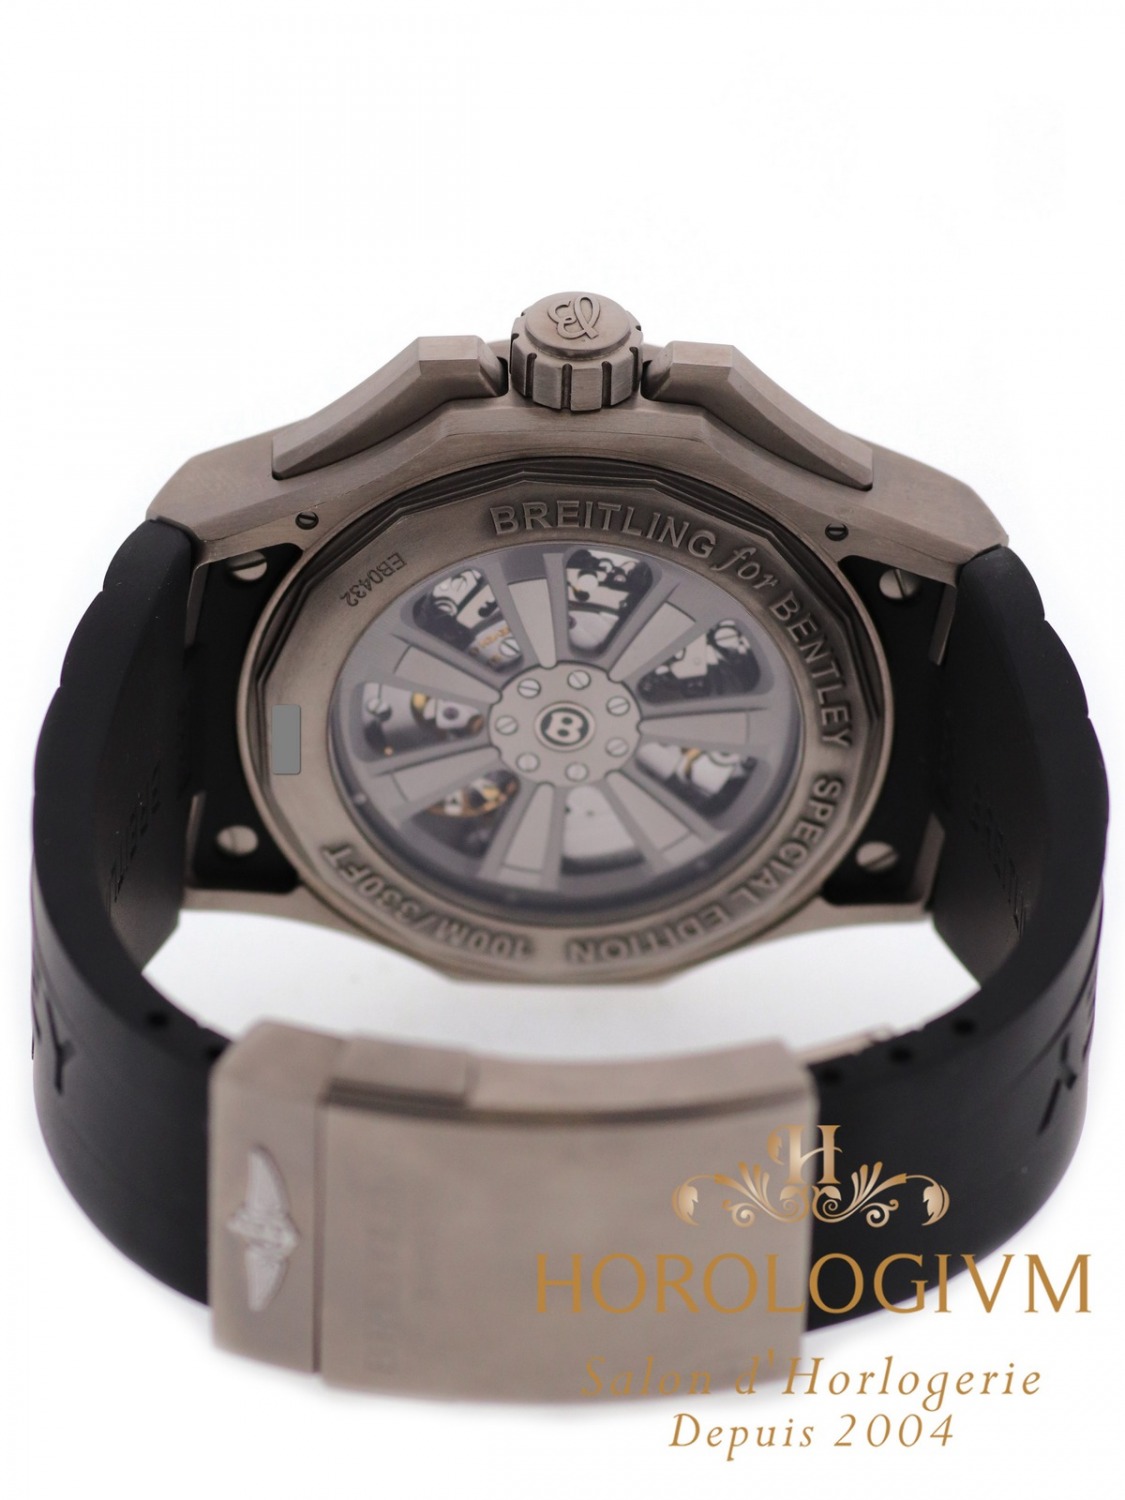 Breitling Bentley GMT Light Body B04 watch, brushed grey